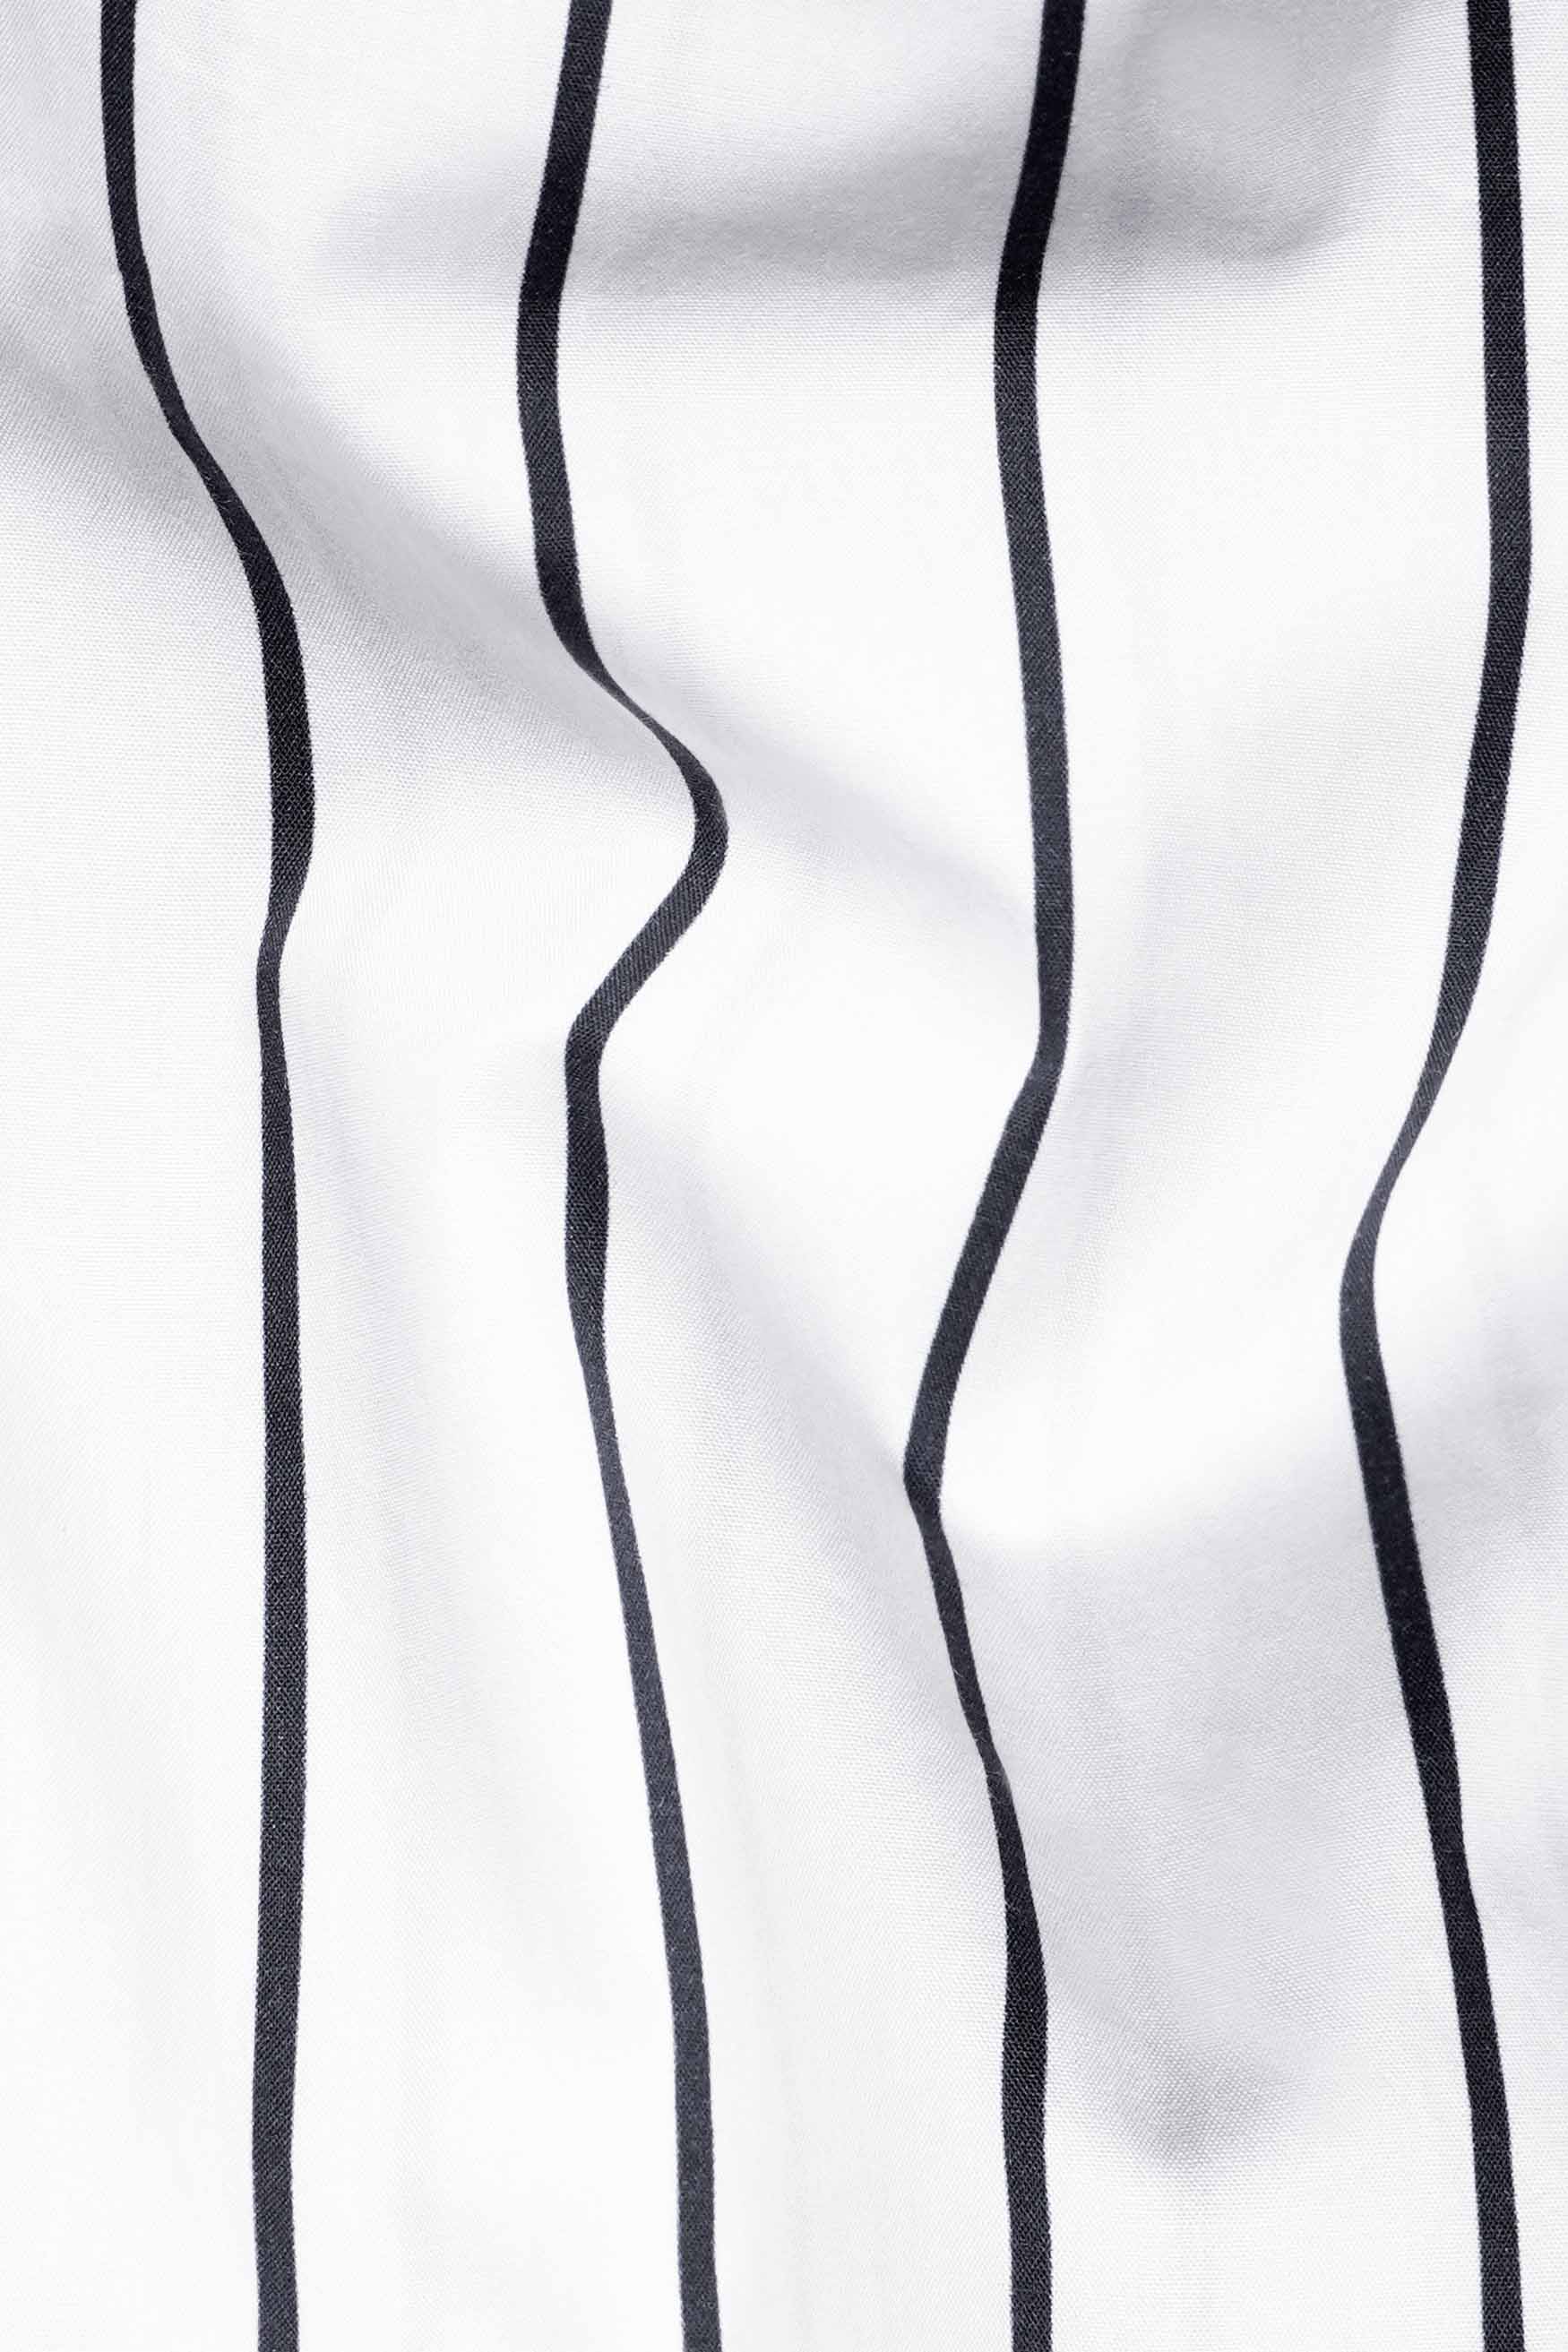 Bright White and Black Striped Premium Cotton Shirt